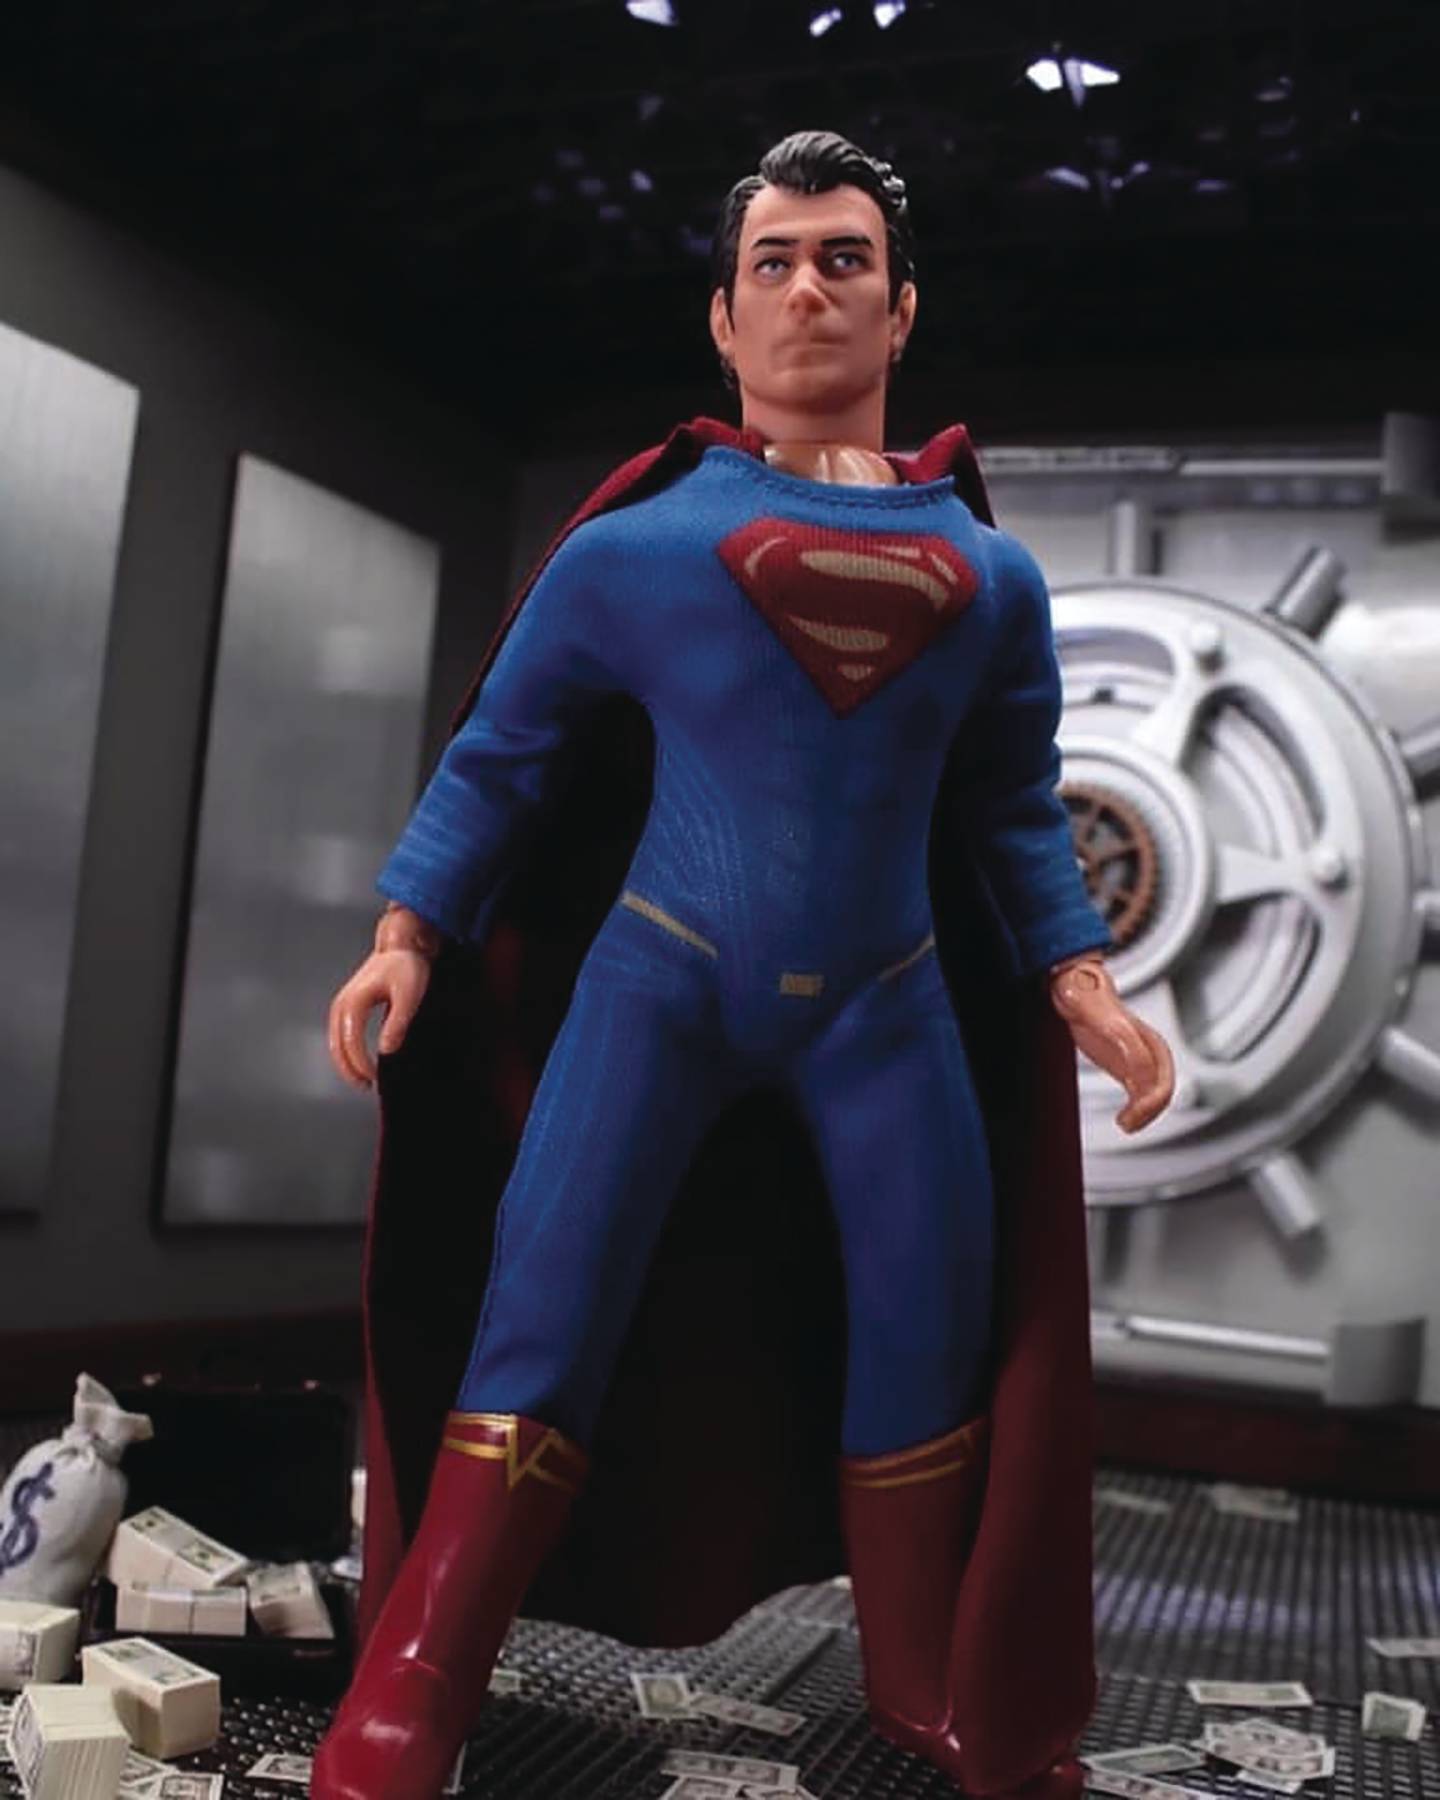 Mego DC Justice League Superman Henry Cavil 8 Inch Action Figure